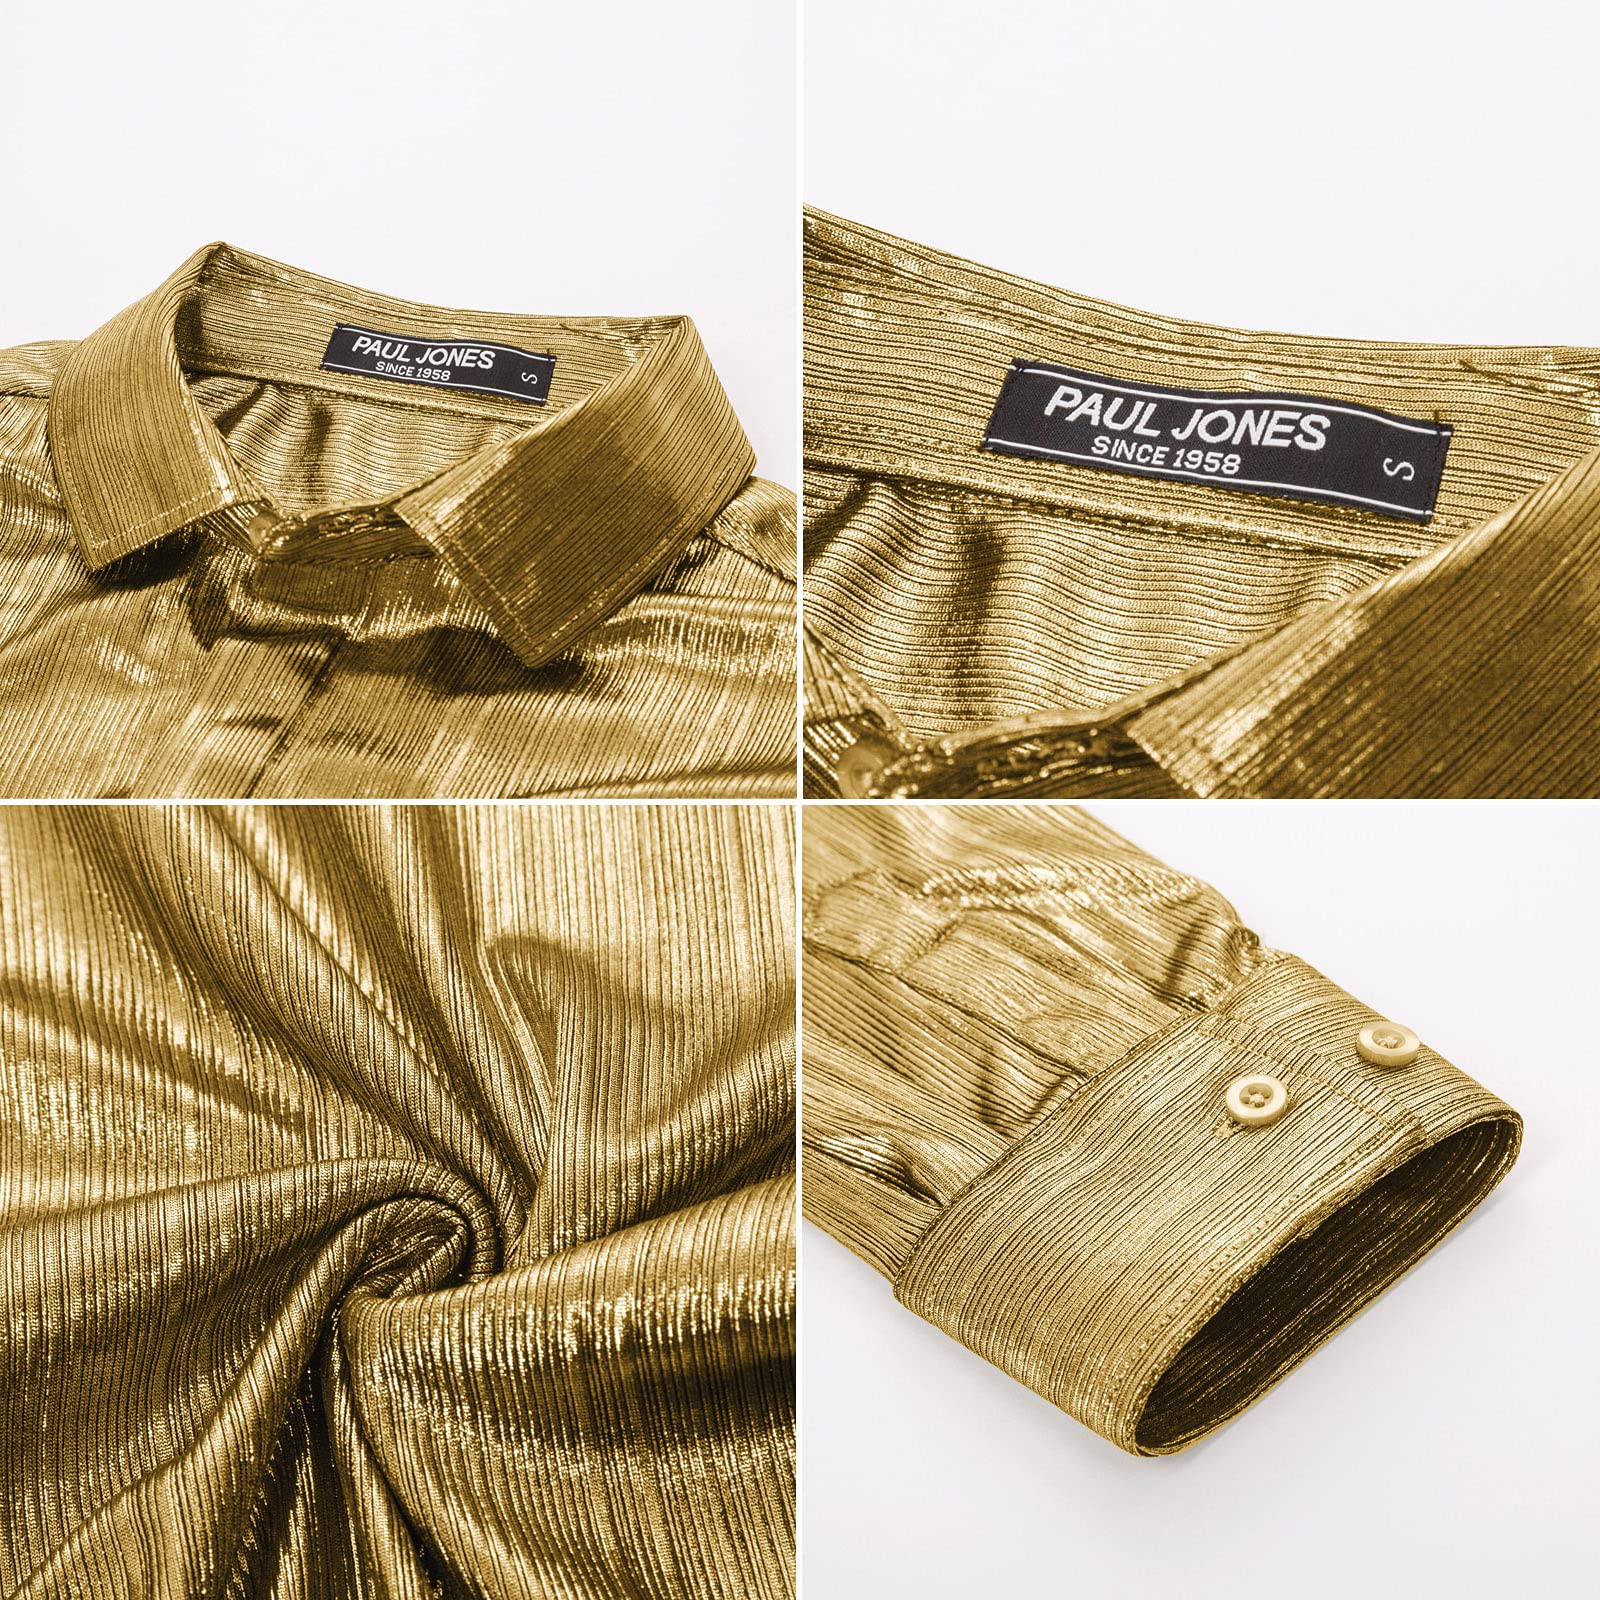 PJ PAUL JONES Mens Metallic Dress Shirts Long Sleeve Button Down 70s Disco Shirt Party Costume